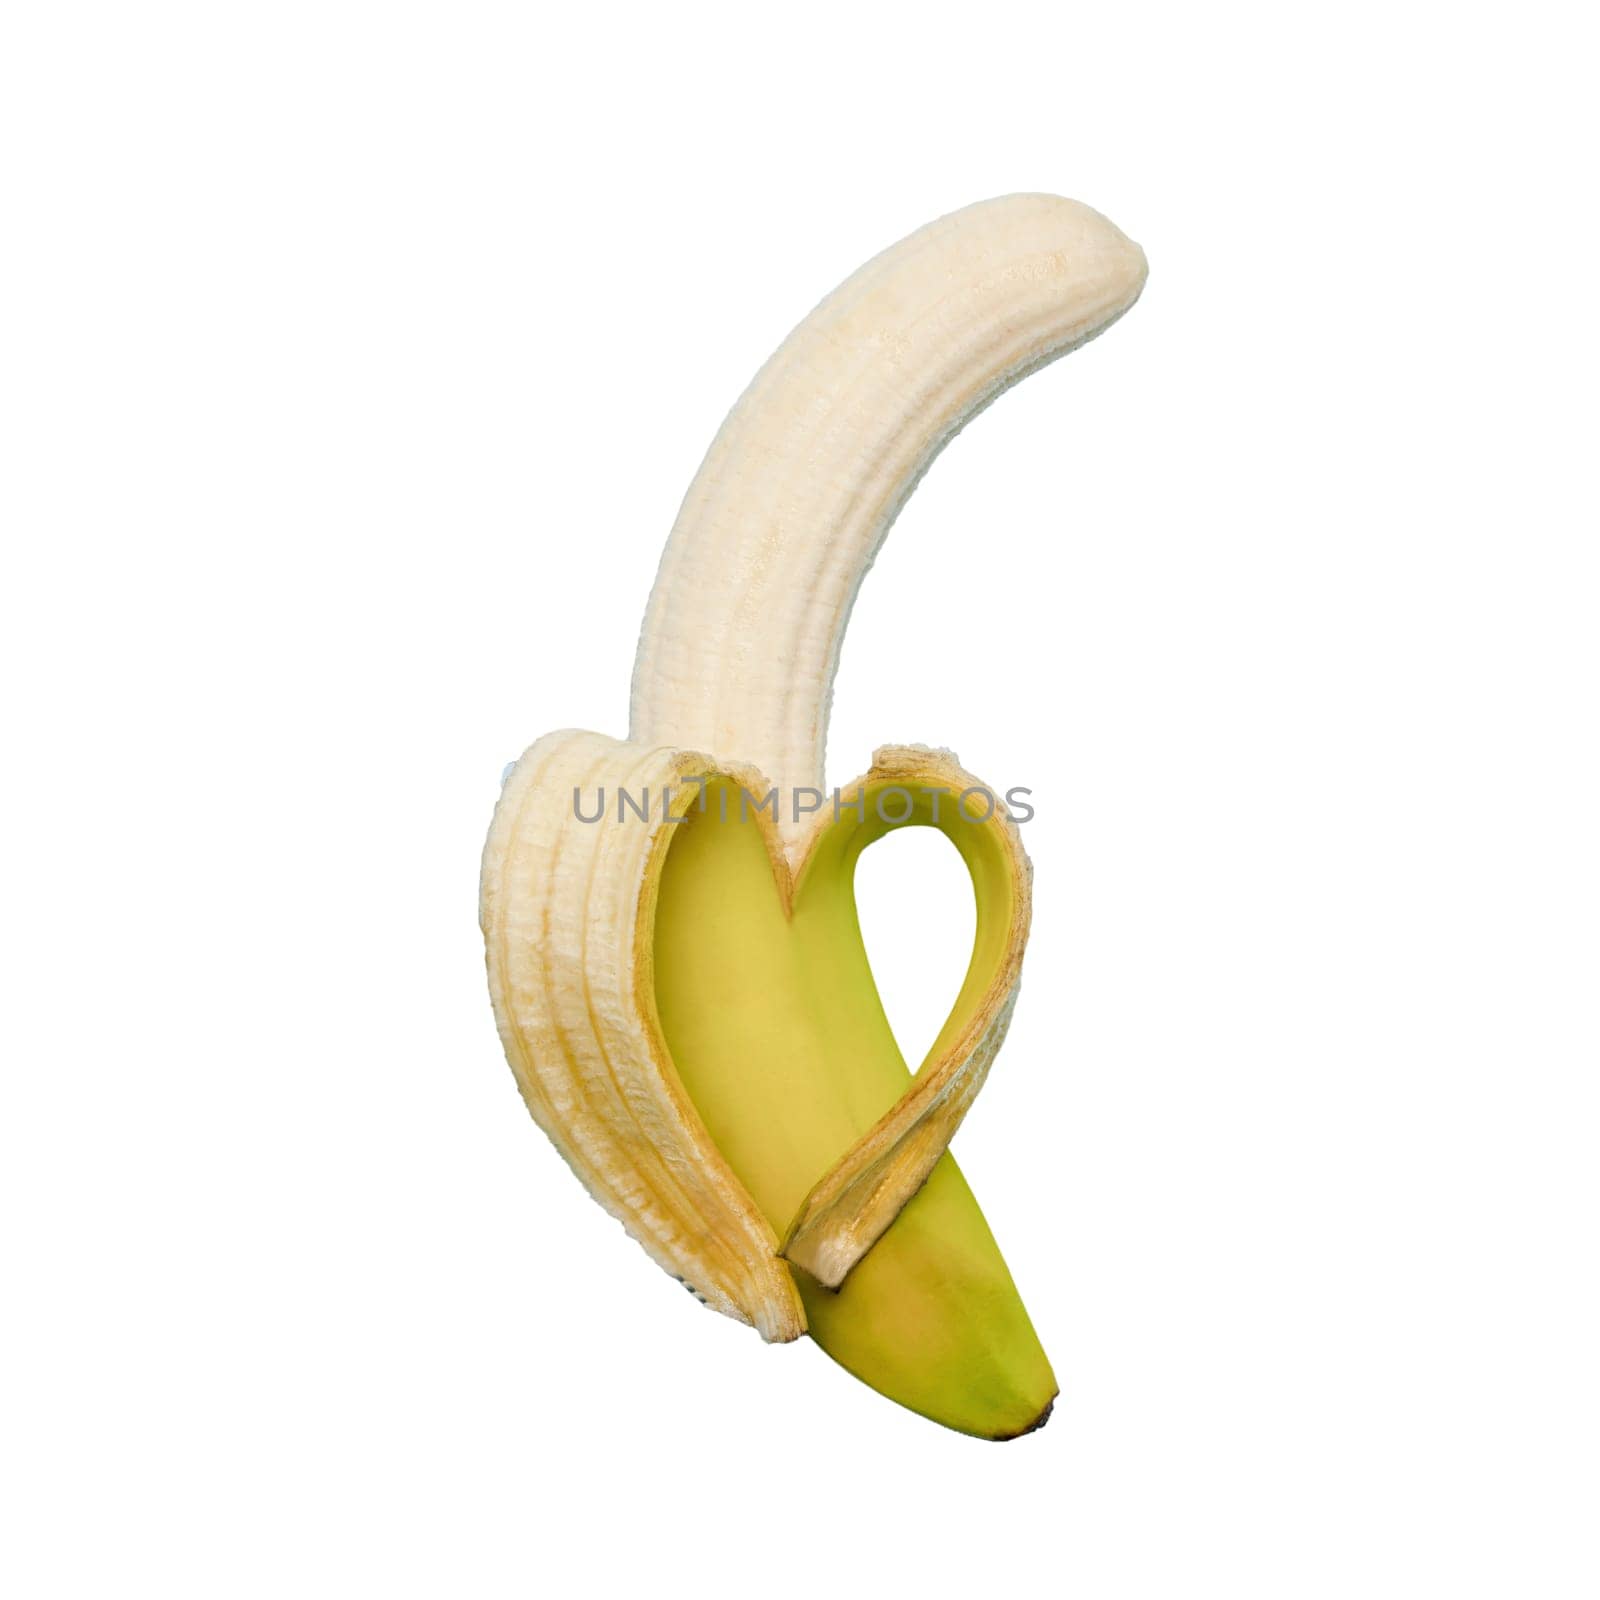 Love banana by sergiodv